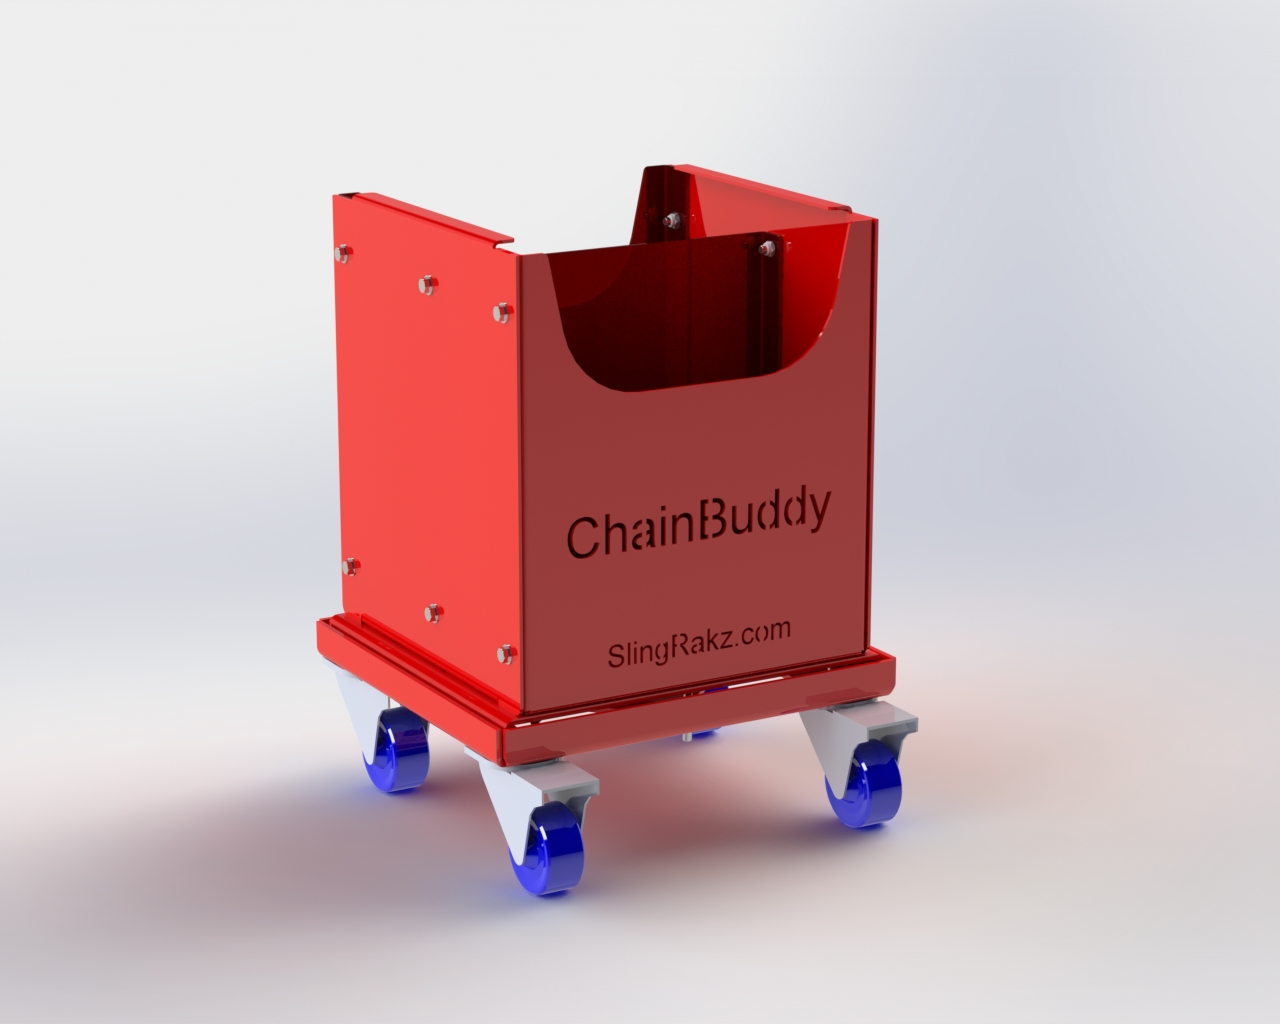 The ChainBuddy Lite